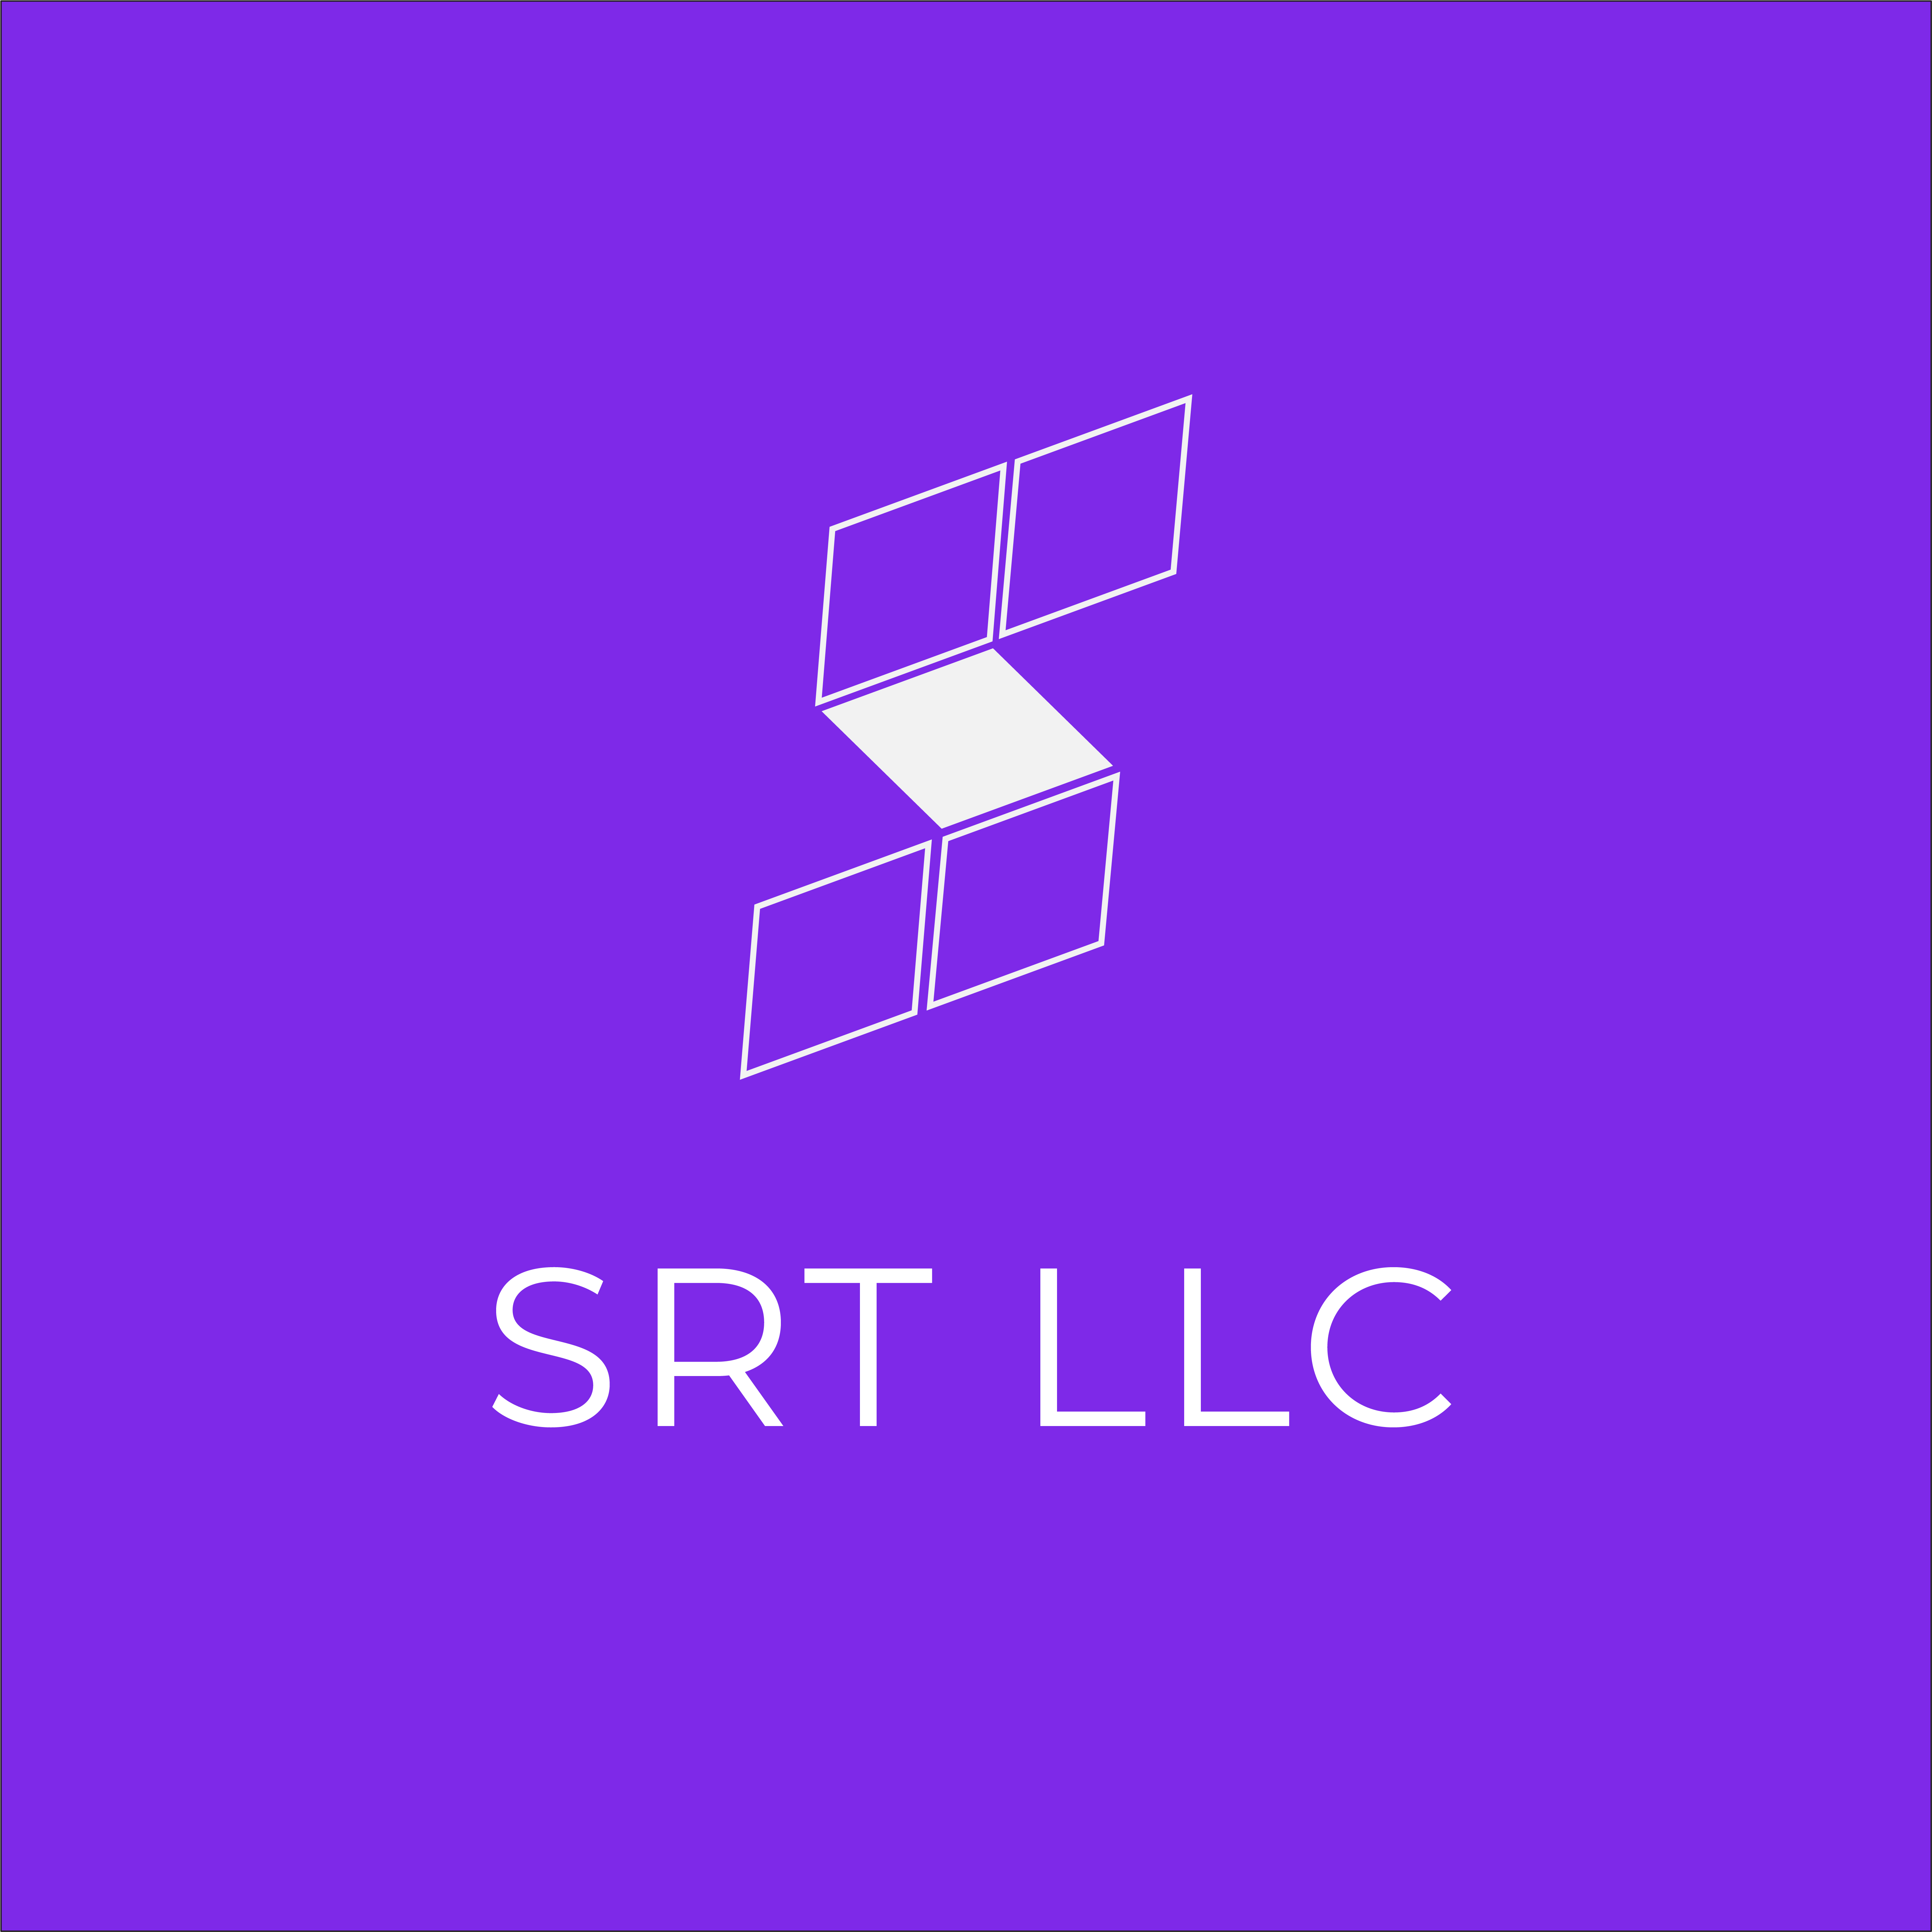 SRT LLC